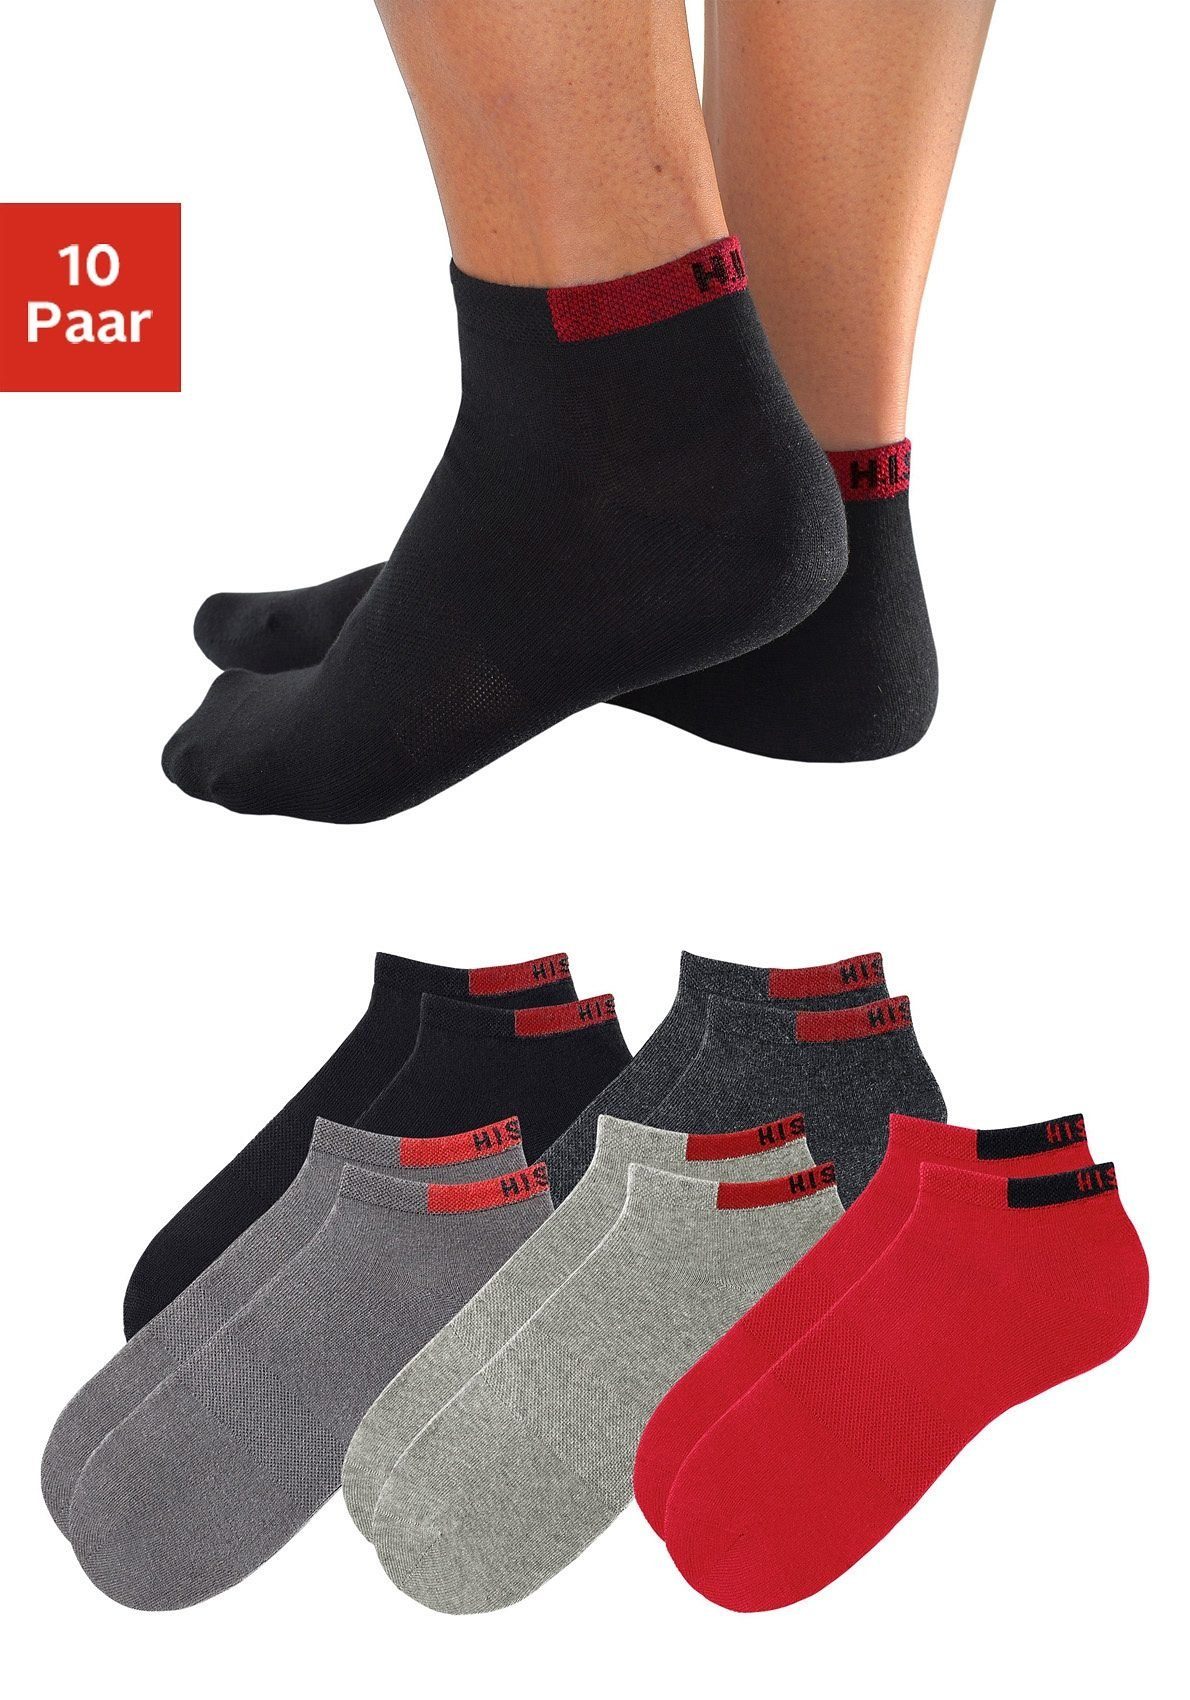 H.I.S Sneakersocken (Set, 10-Paar) mit verstärkten Belastungszonen 2x schwarz, 2x grau, 2x rot, 2x anthrazit-meliert, 2x hellgrau-meliert